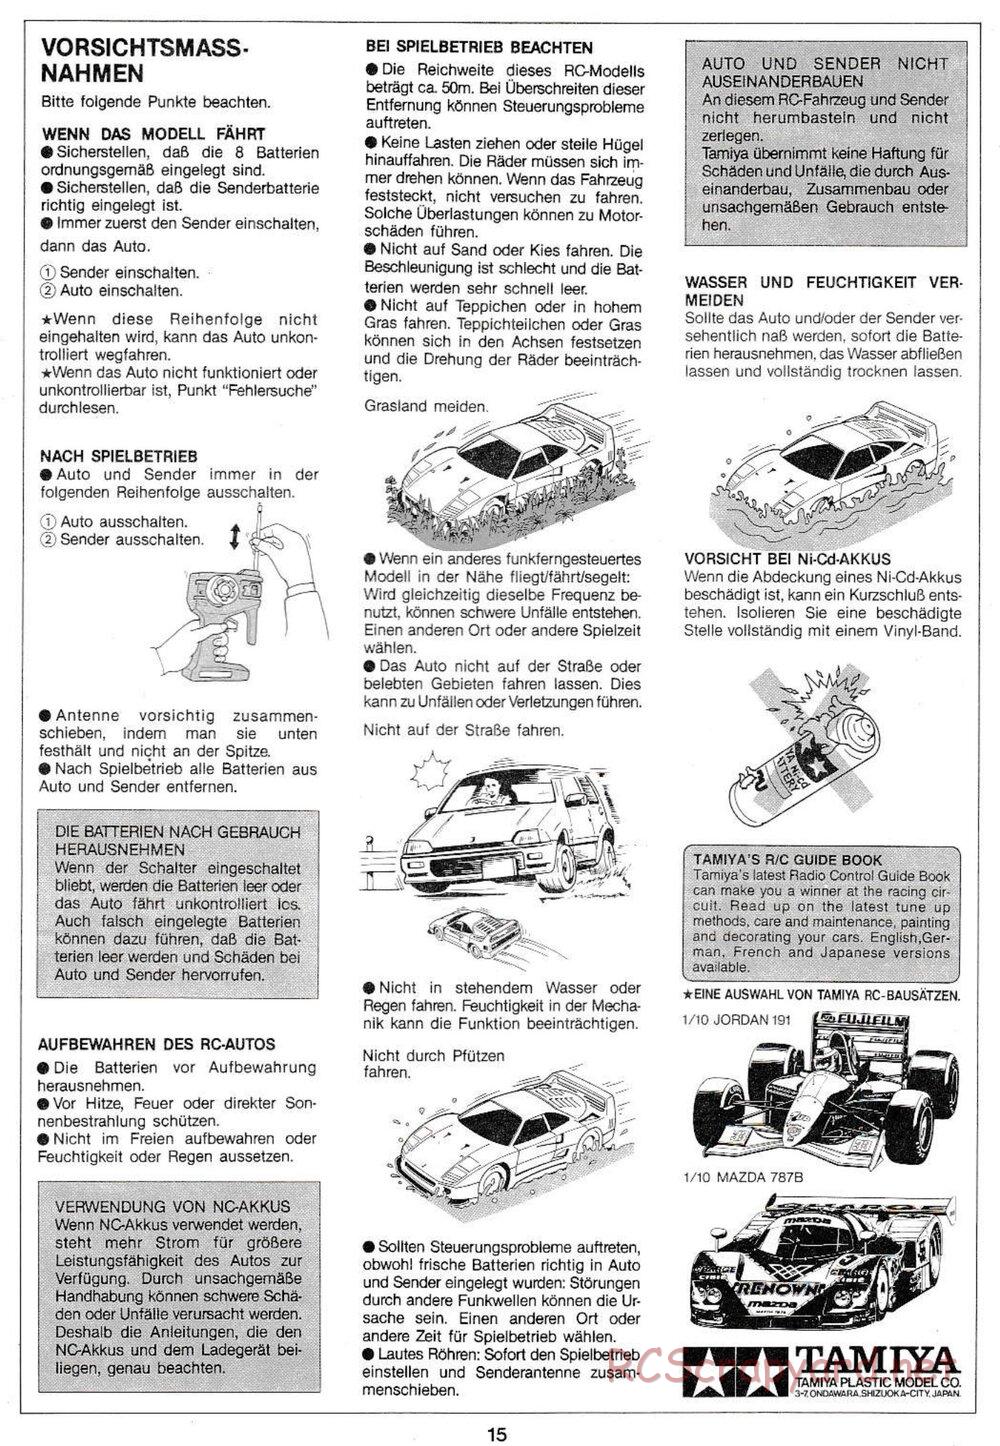 Tamiya - Ferrari F40 QD Chassis - Manual - Page 15